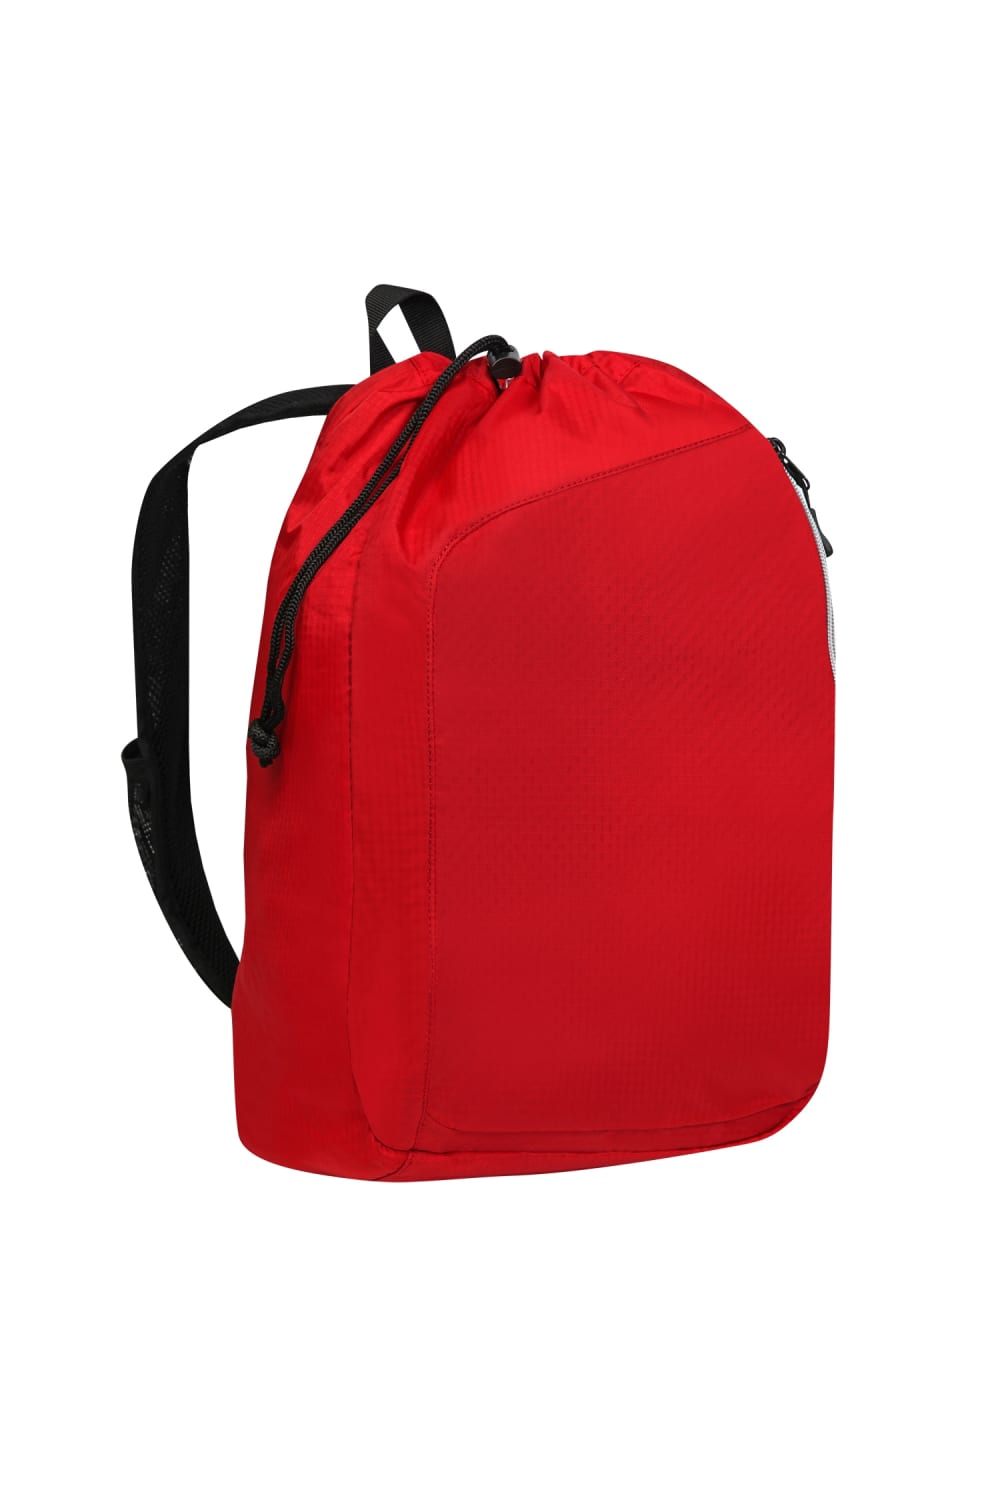 Endurance Sonic Single Strap Backpack/Rucksack - Red/ Black